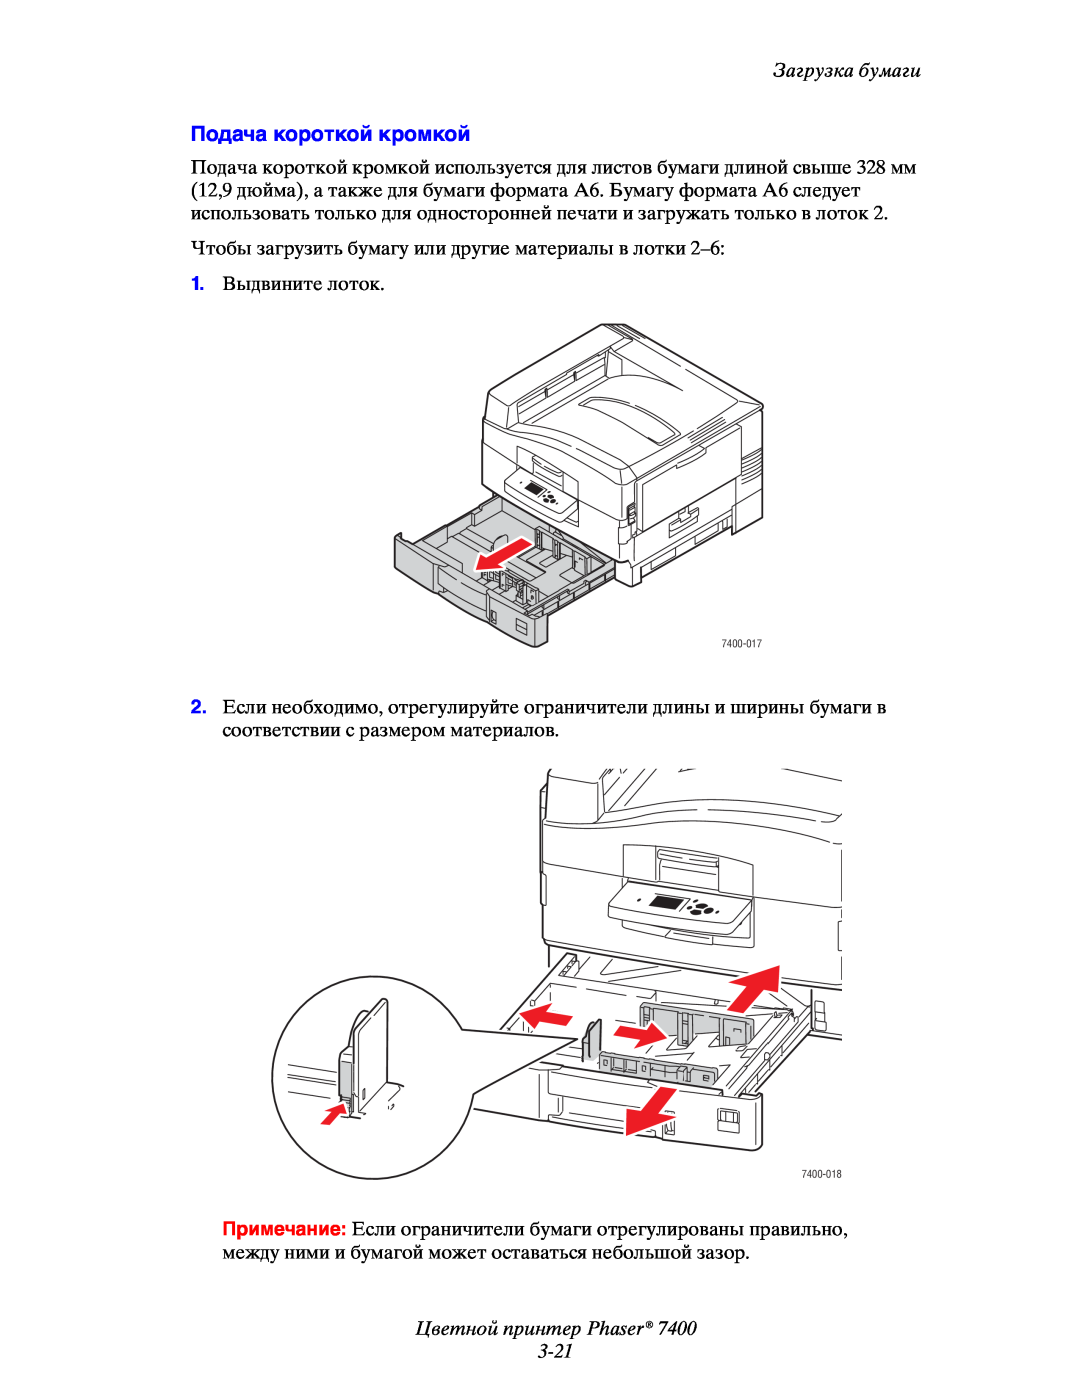 Xerox 7400 manual Подача короткой кромкой, Цветной принтер Phaser 3-21, Загрузка бумаги 